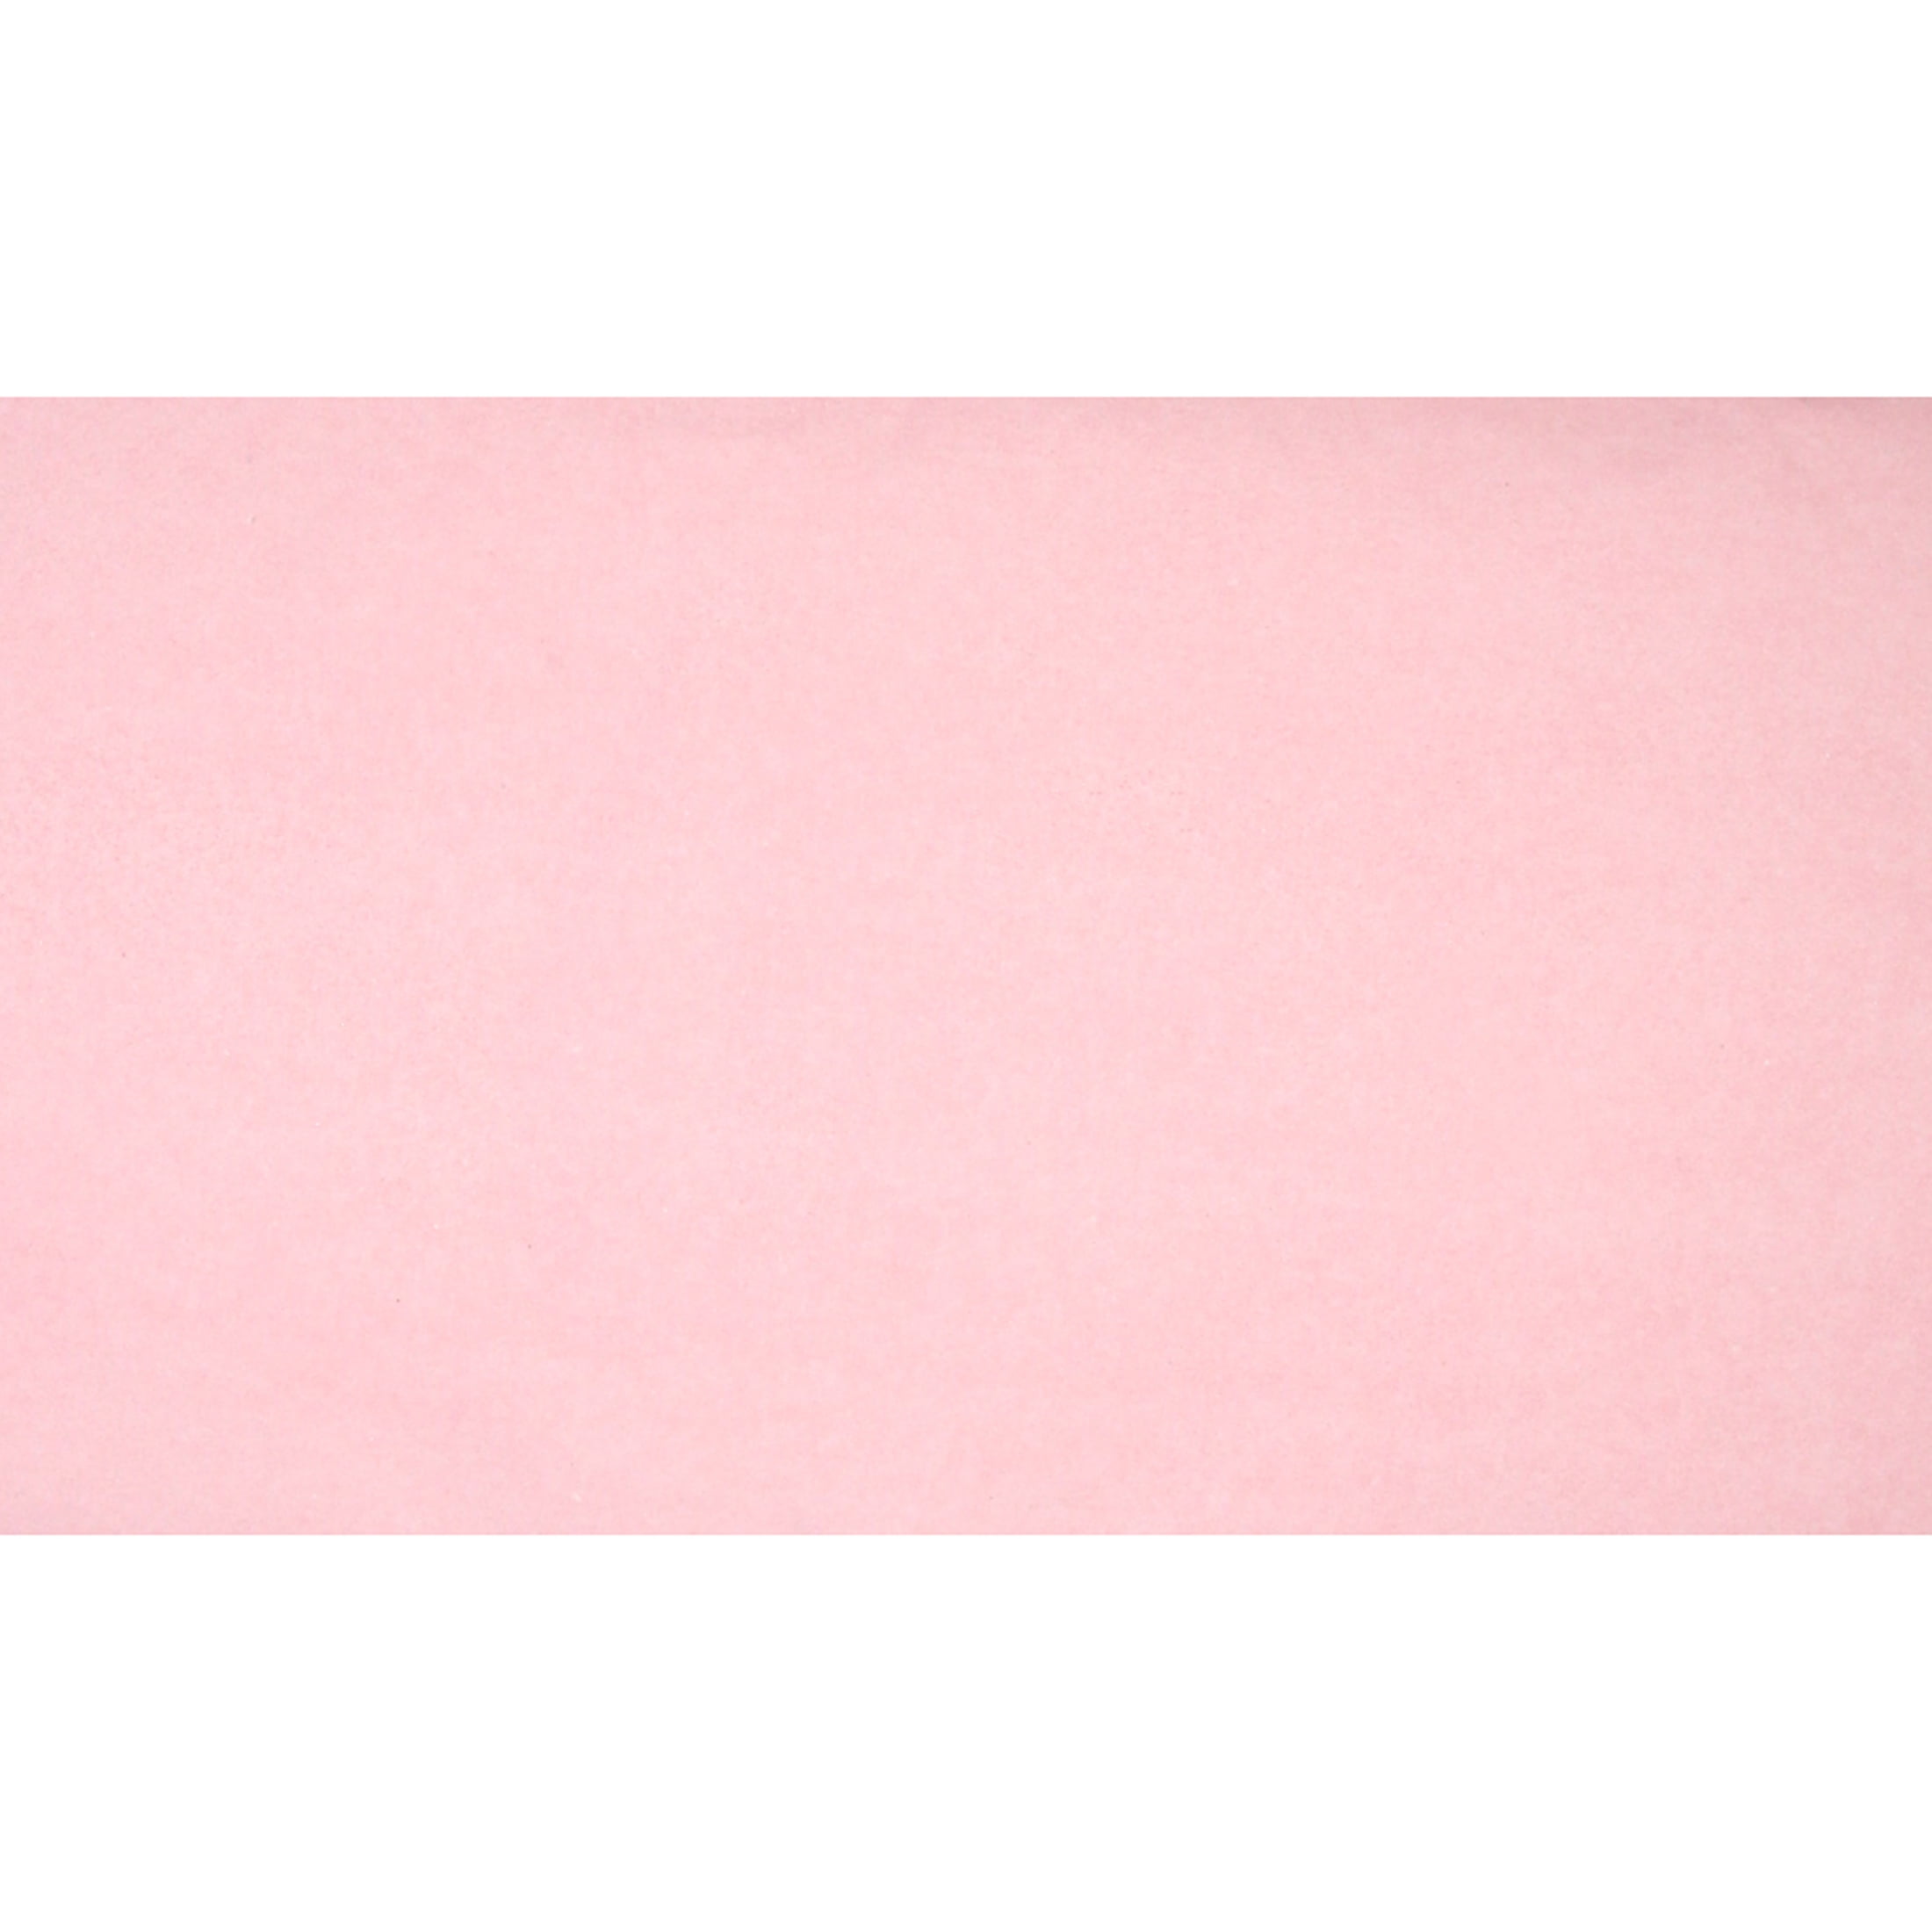 Light Pink Tissue Paper, 15x20, 100 ct 